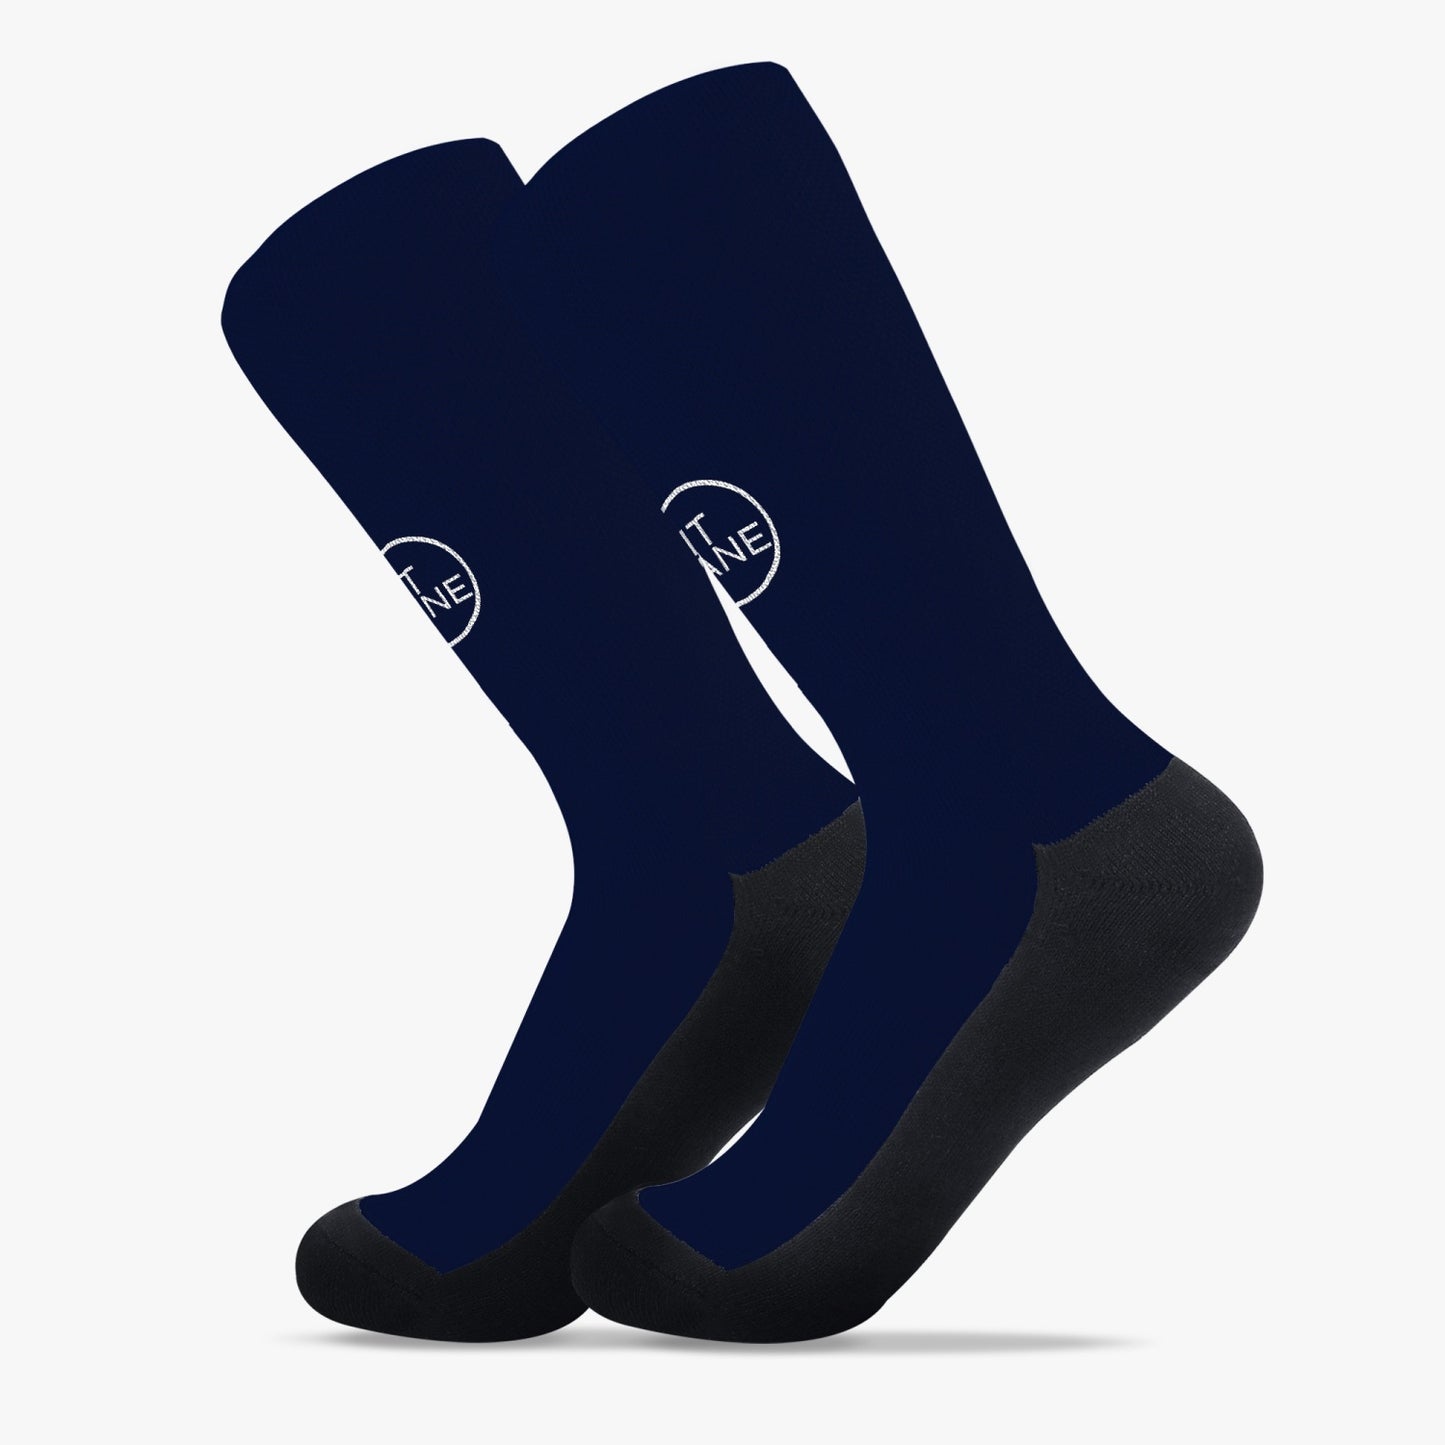 PIT LANE CLOTHING Reinforced Sports Socks